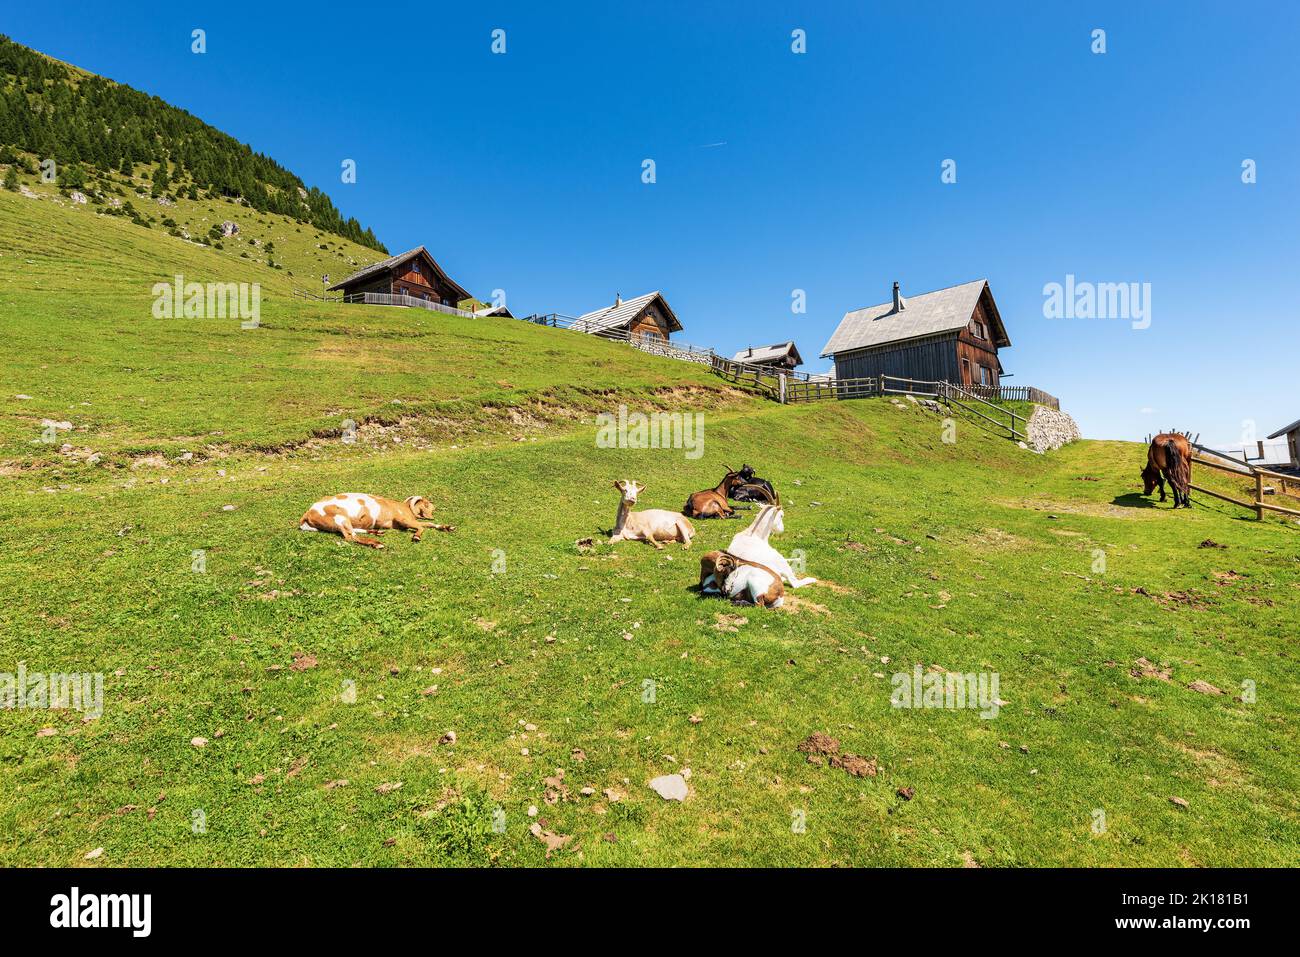 Village with wooden chalets, goats and a horse. Italy-Austria border, Feistritz an der Gail, Osternig or Oisternig peak, Carinthia, Alps, Austria. Stock Photo